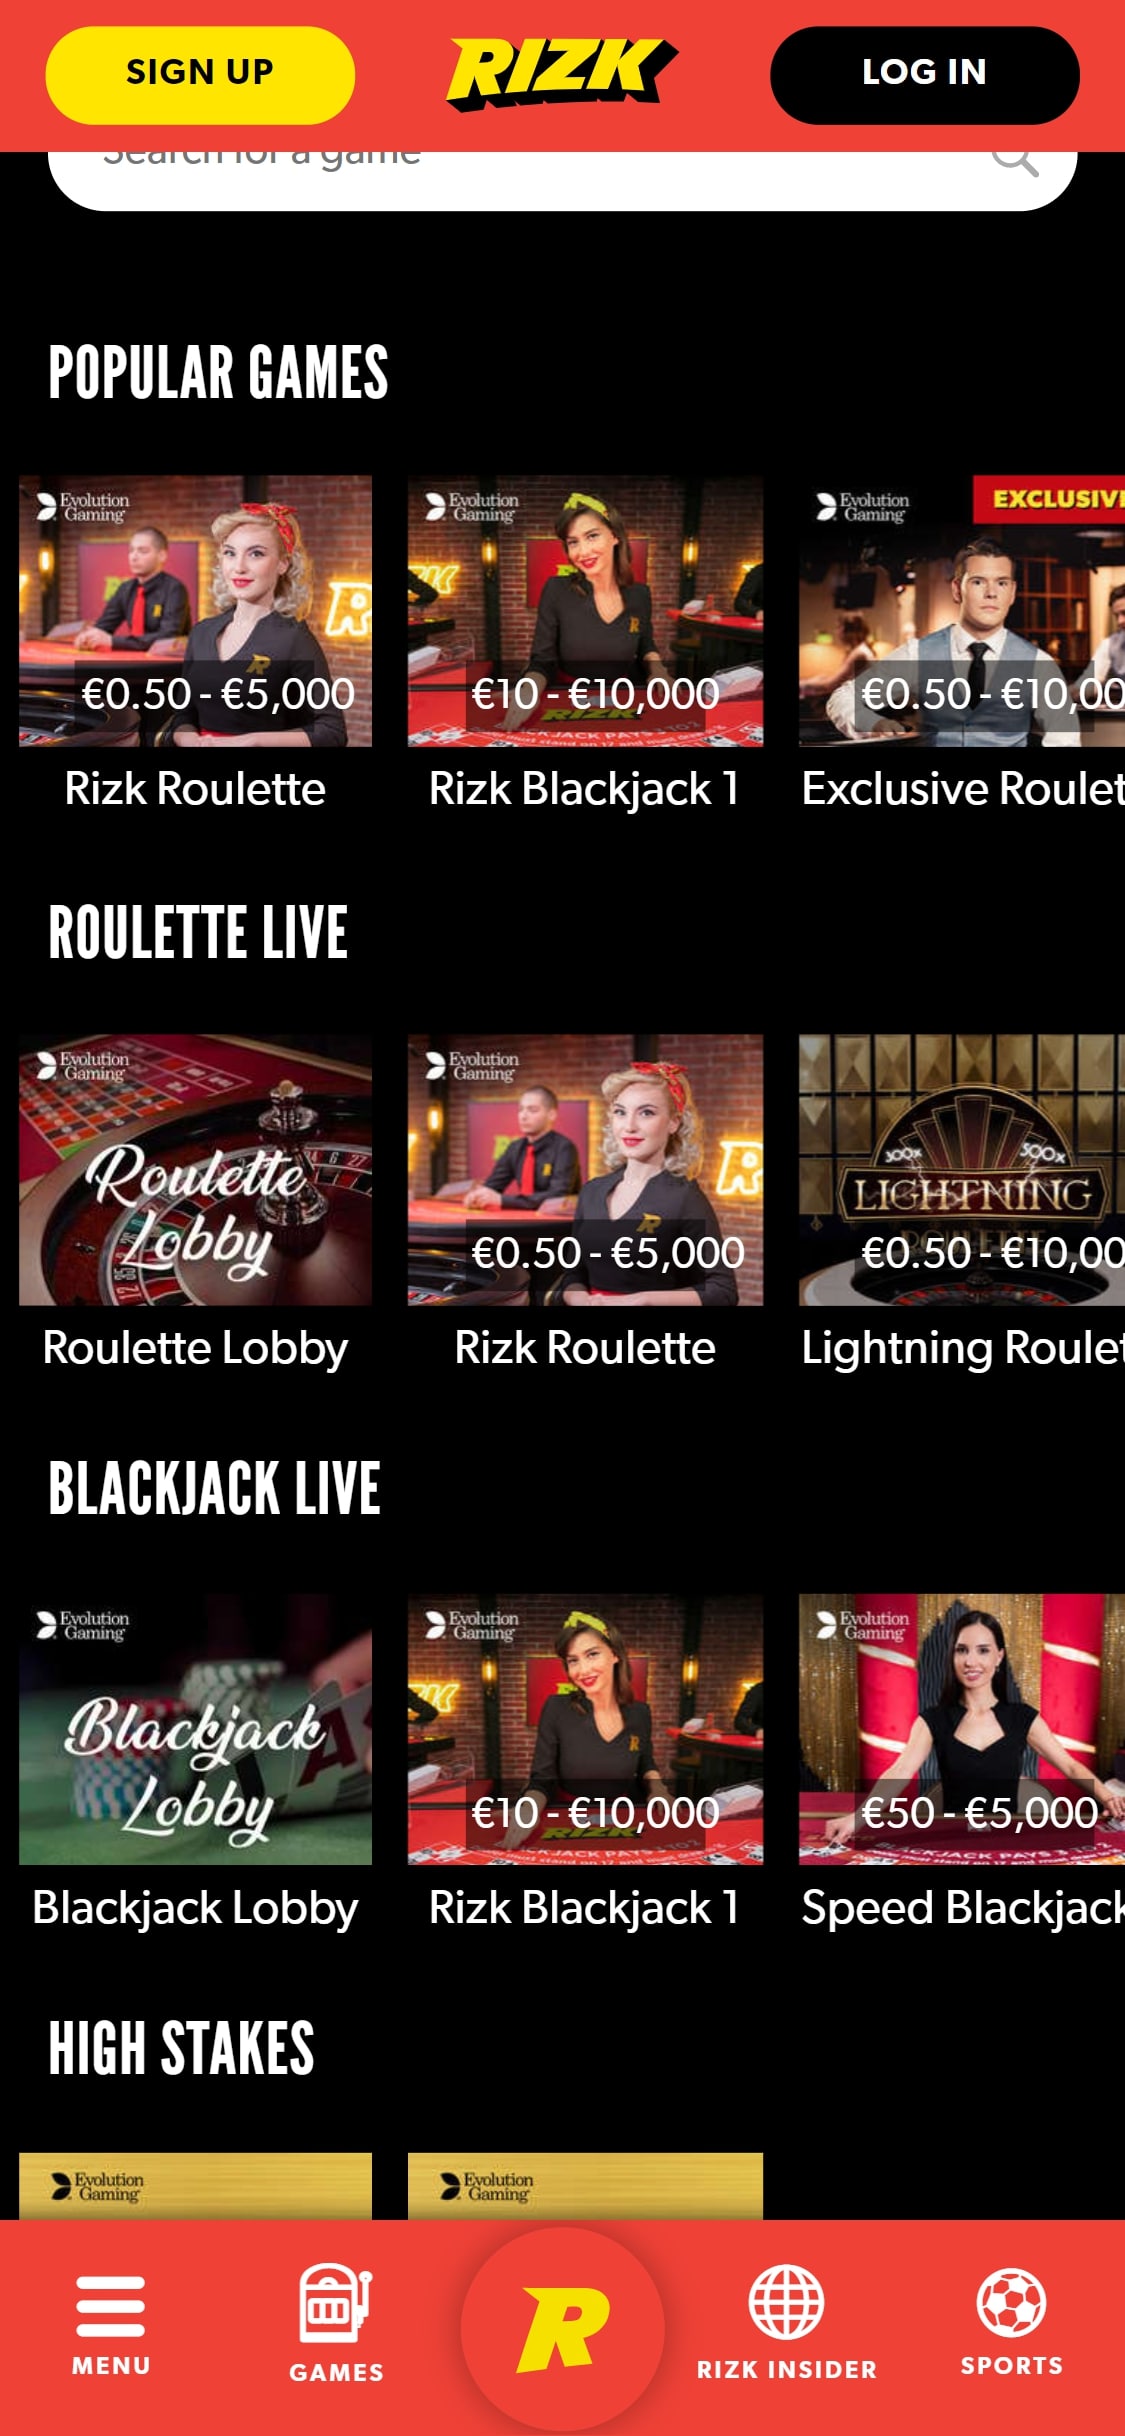 Rizk Casino Mobile Live Dealer Games Review